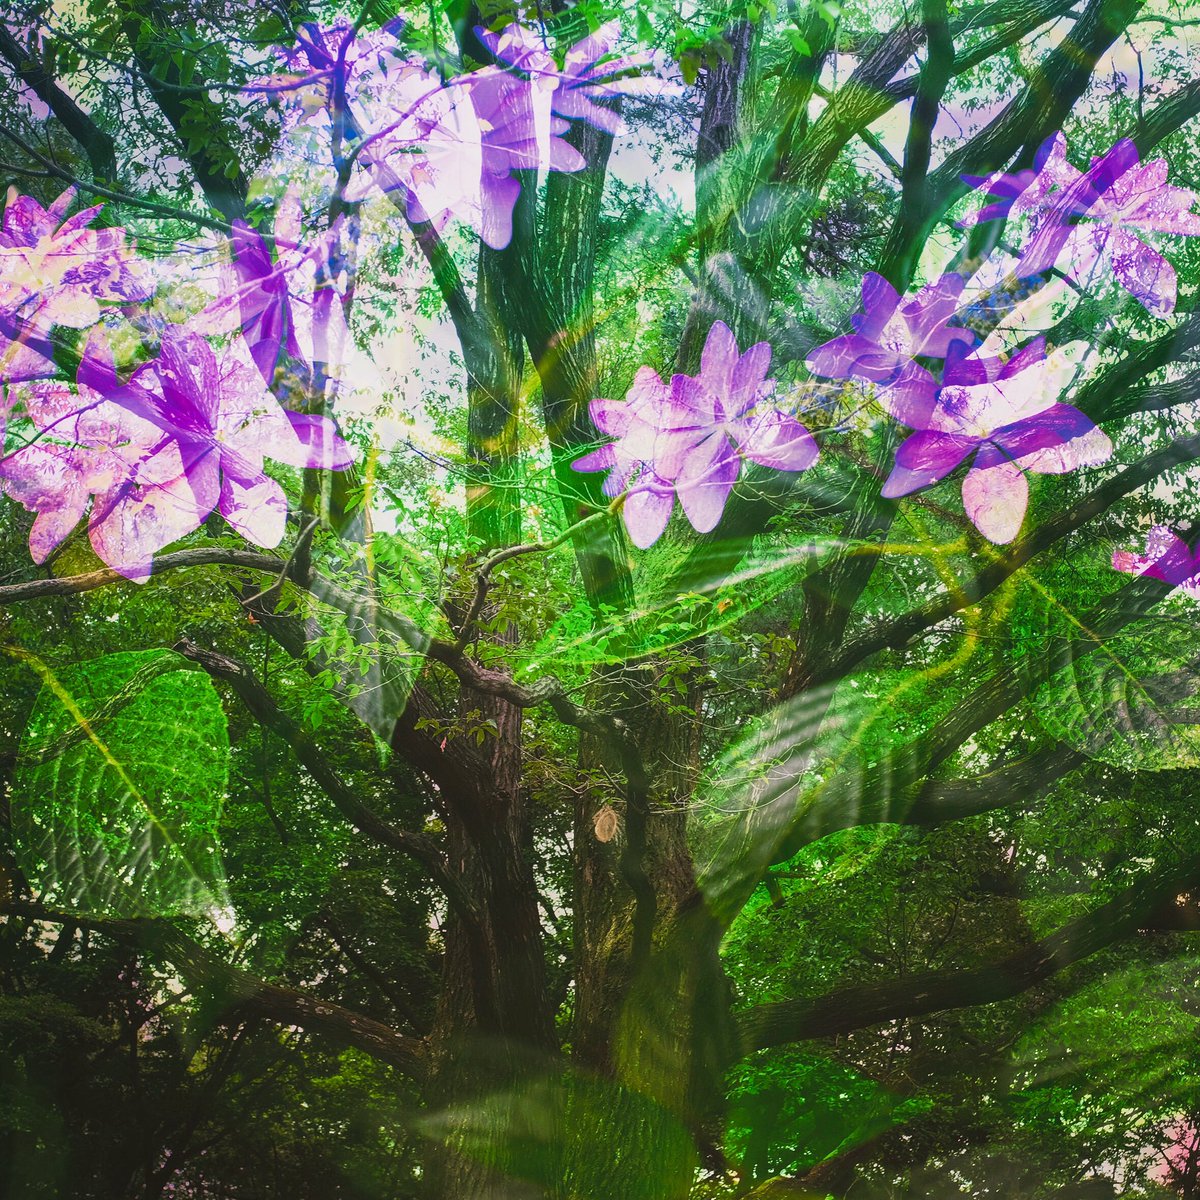 ・
forest bath
・
・
#nature #forestbath #森林浴 
#tree #flower #hydrangea #multipleexposure
#naturephotograph